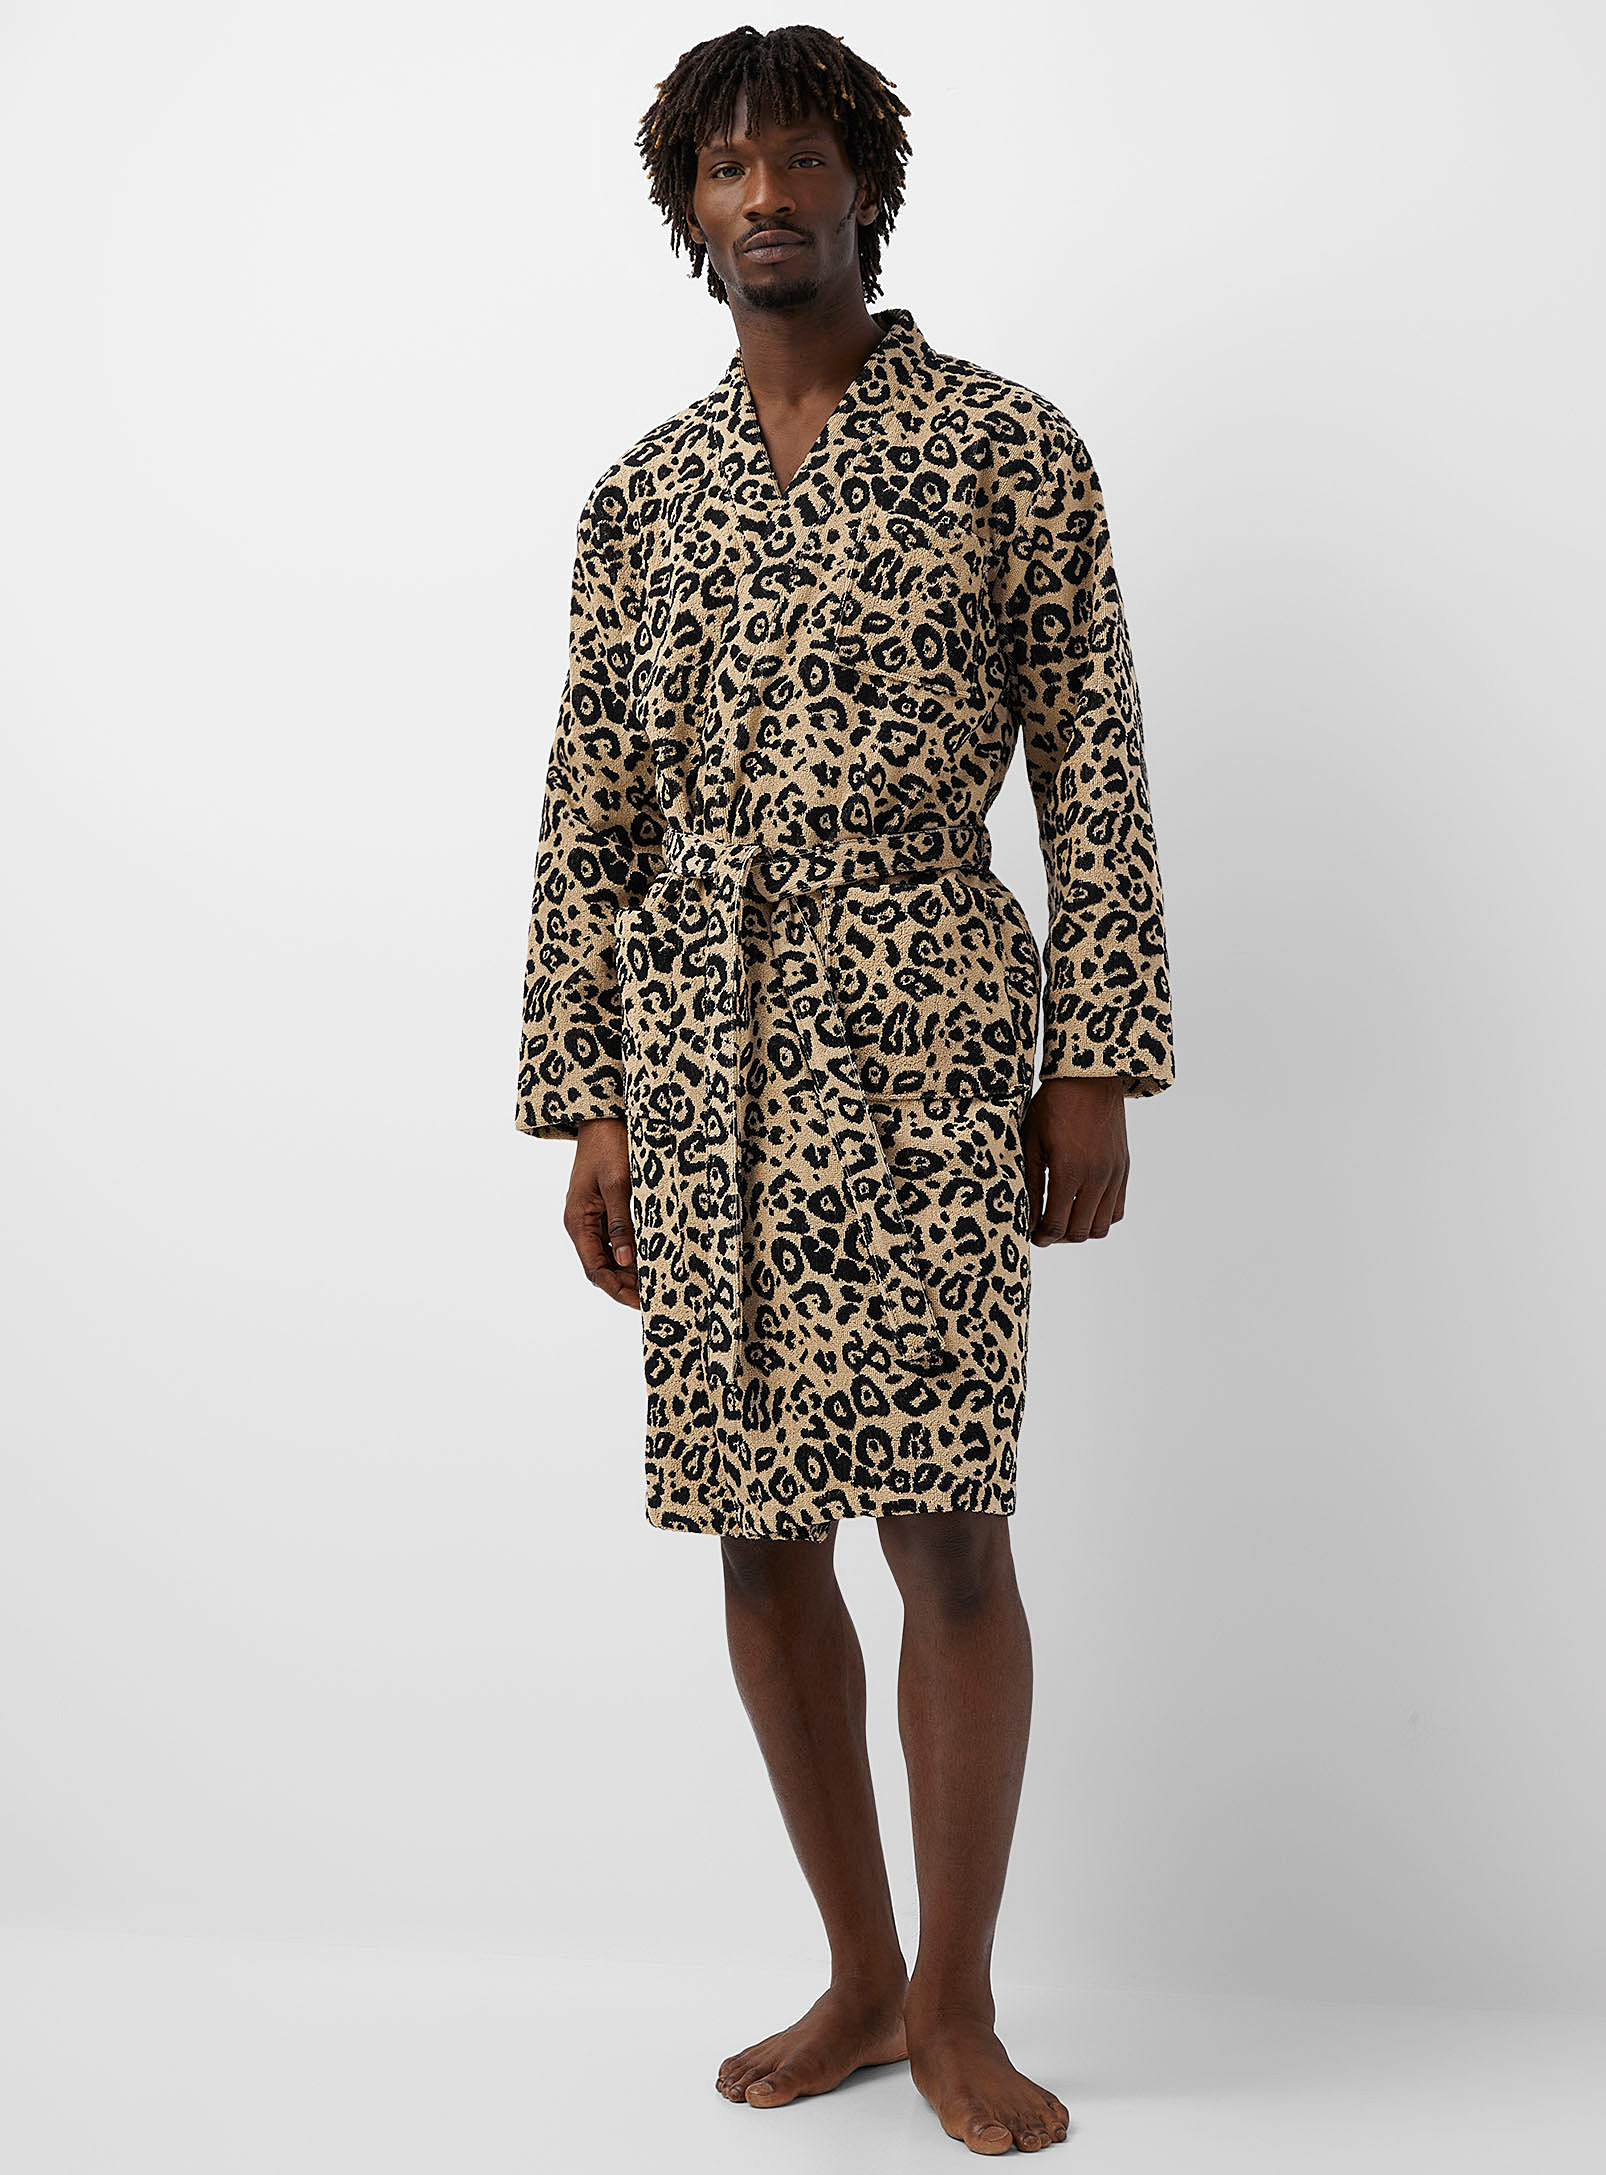 Oas - Men's Leopard terry robe